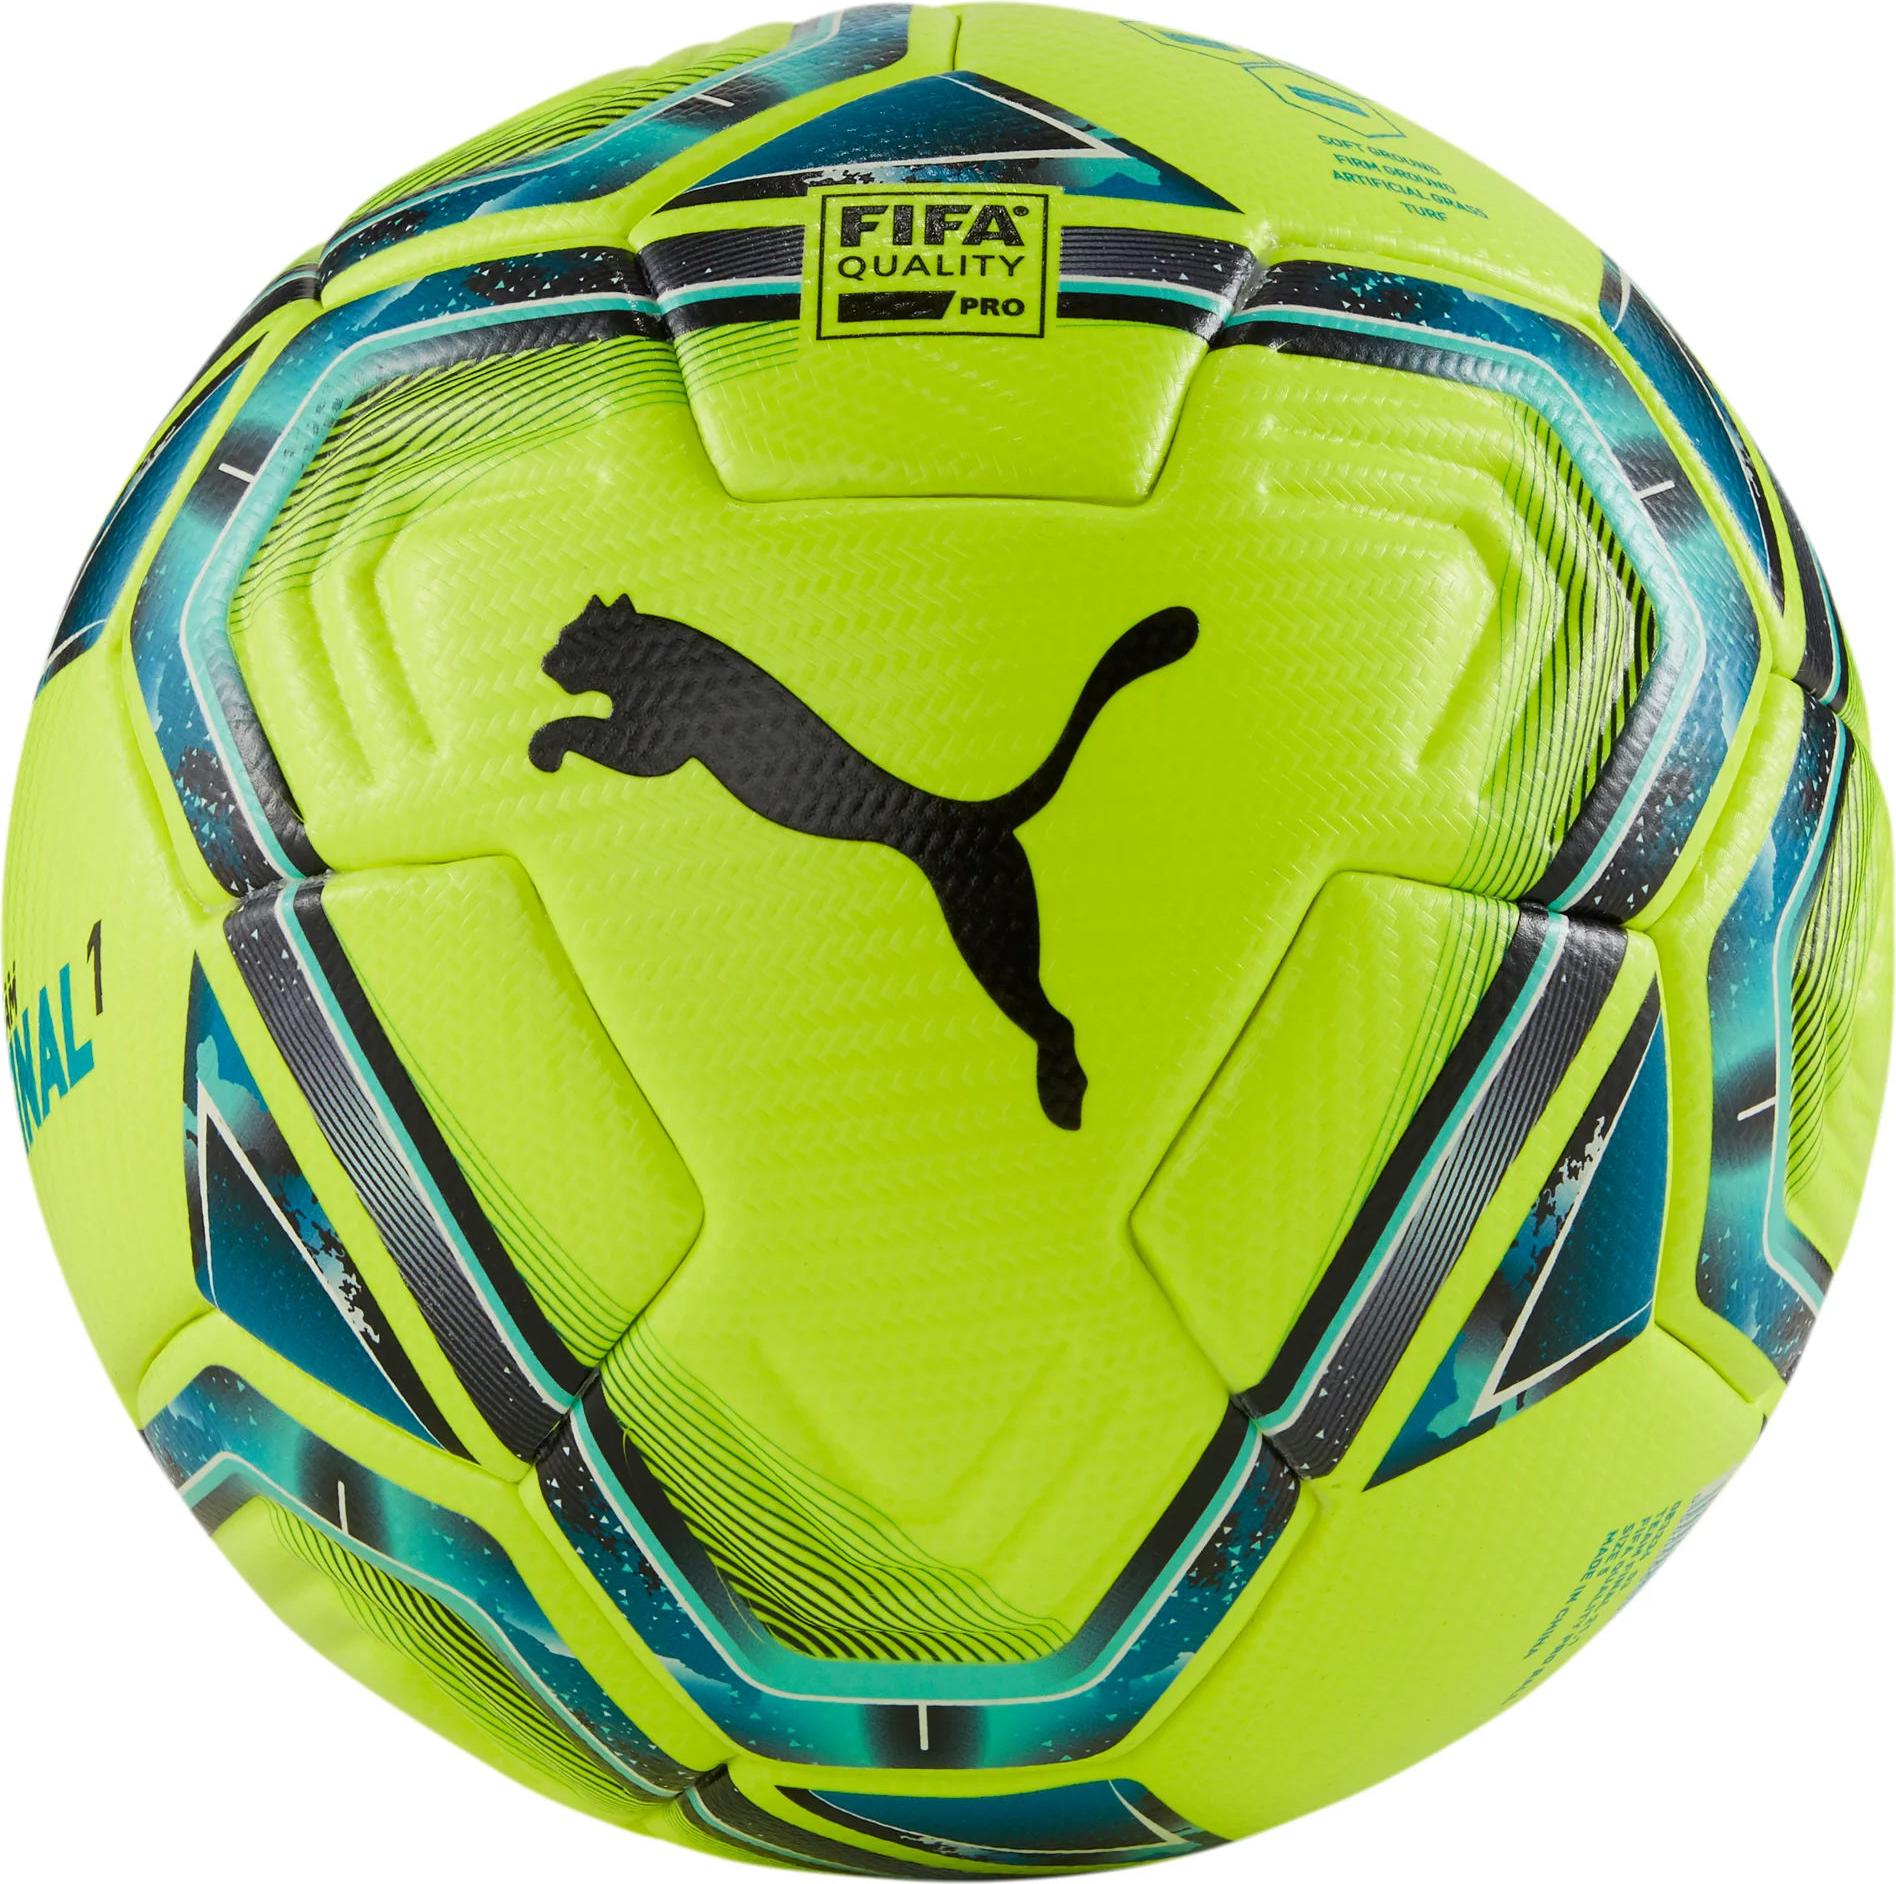 Ball Puma teamFINAL 21.1 FIFA Quality Pro